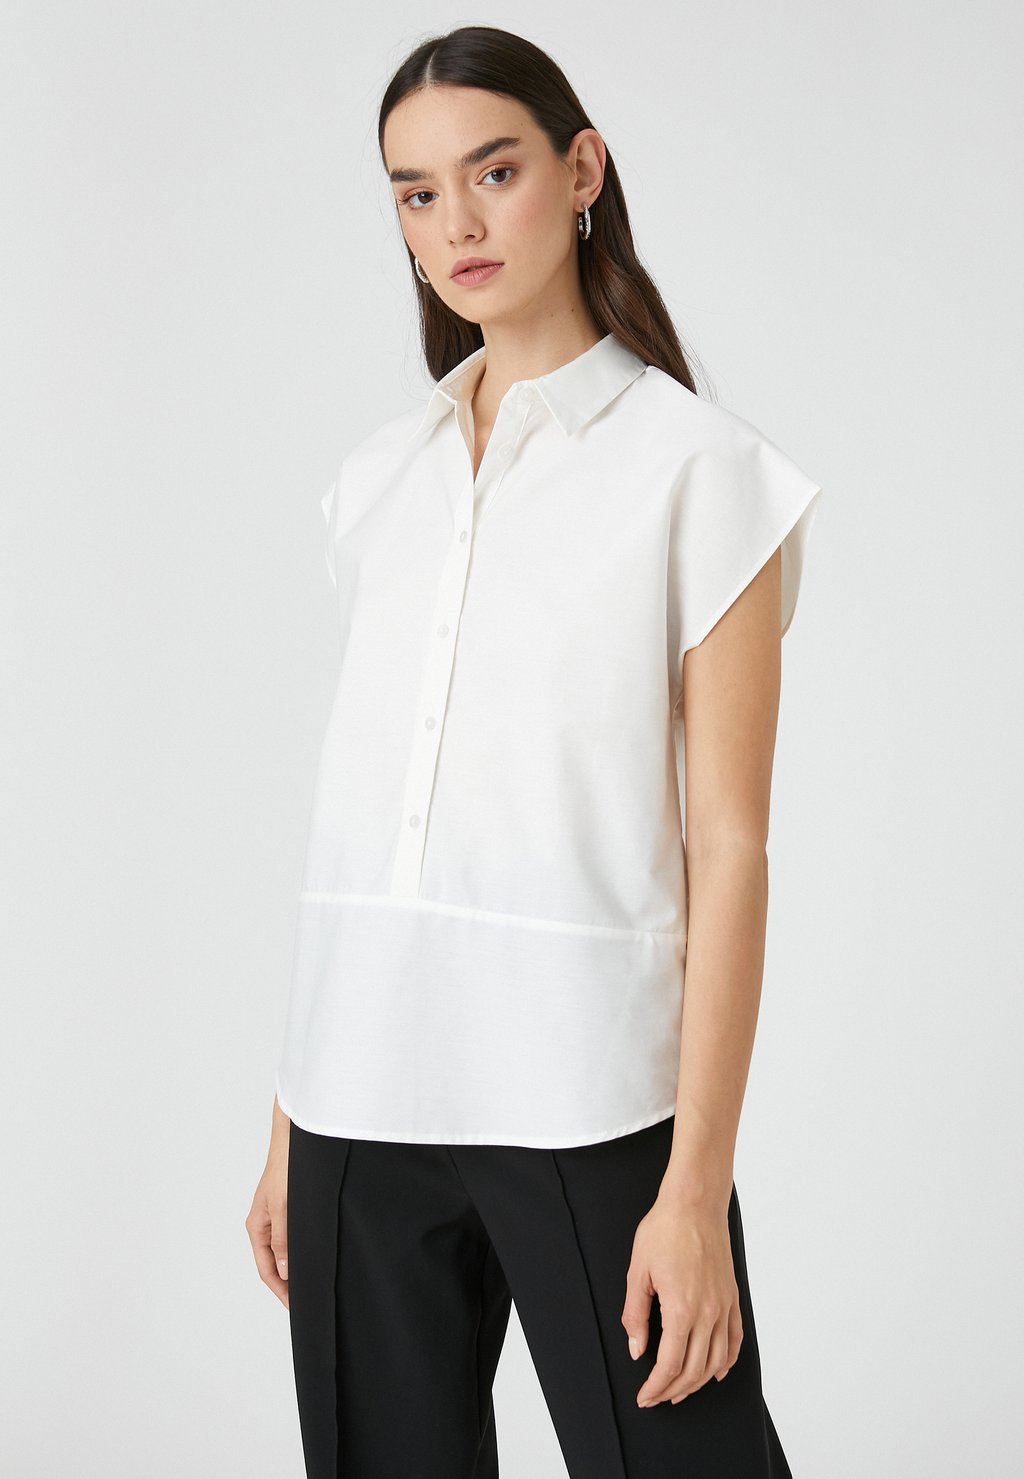 Блузка Koton с коротким рукавом, белый блузка с коротким рукавом koton teenage 1yal68330iw цвет blue check размер 40